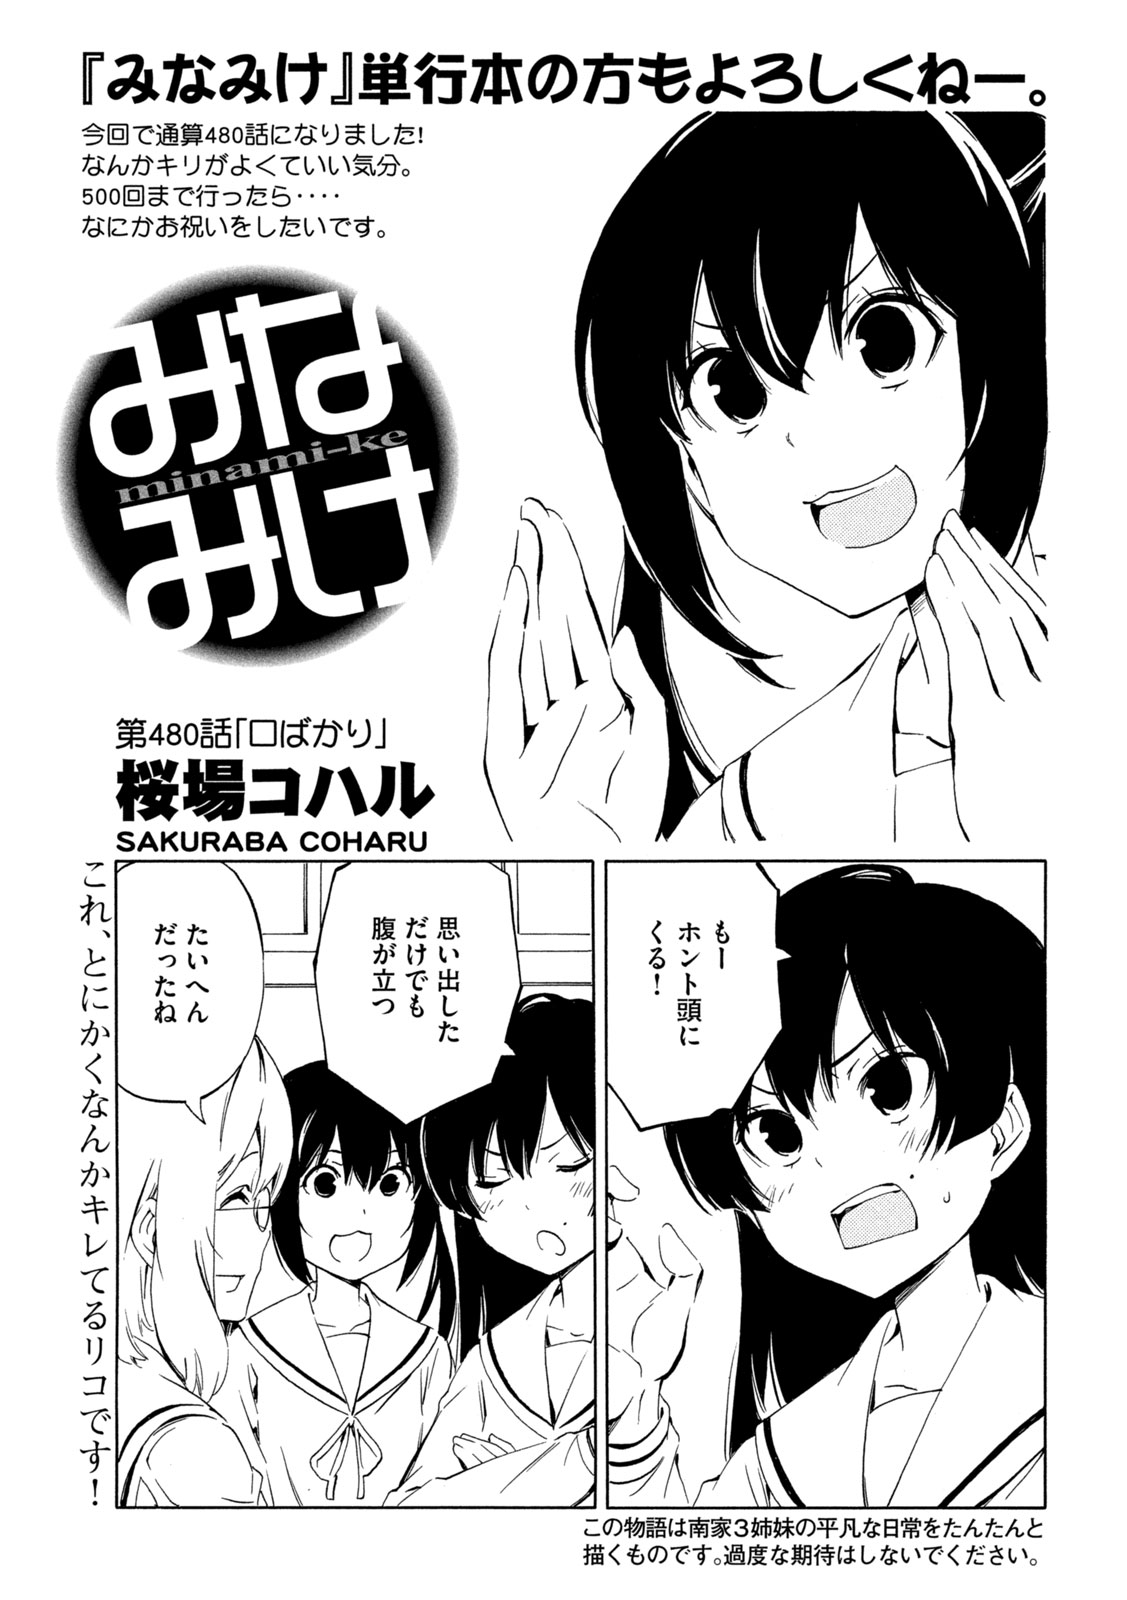 Minami-ke - Chapter 480 - Page 1